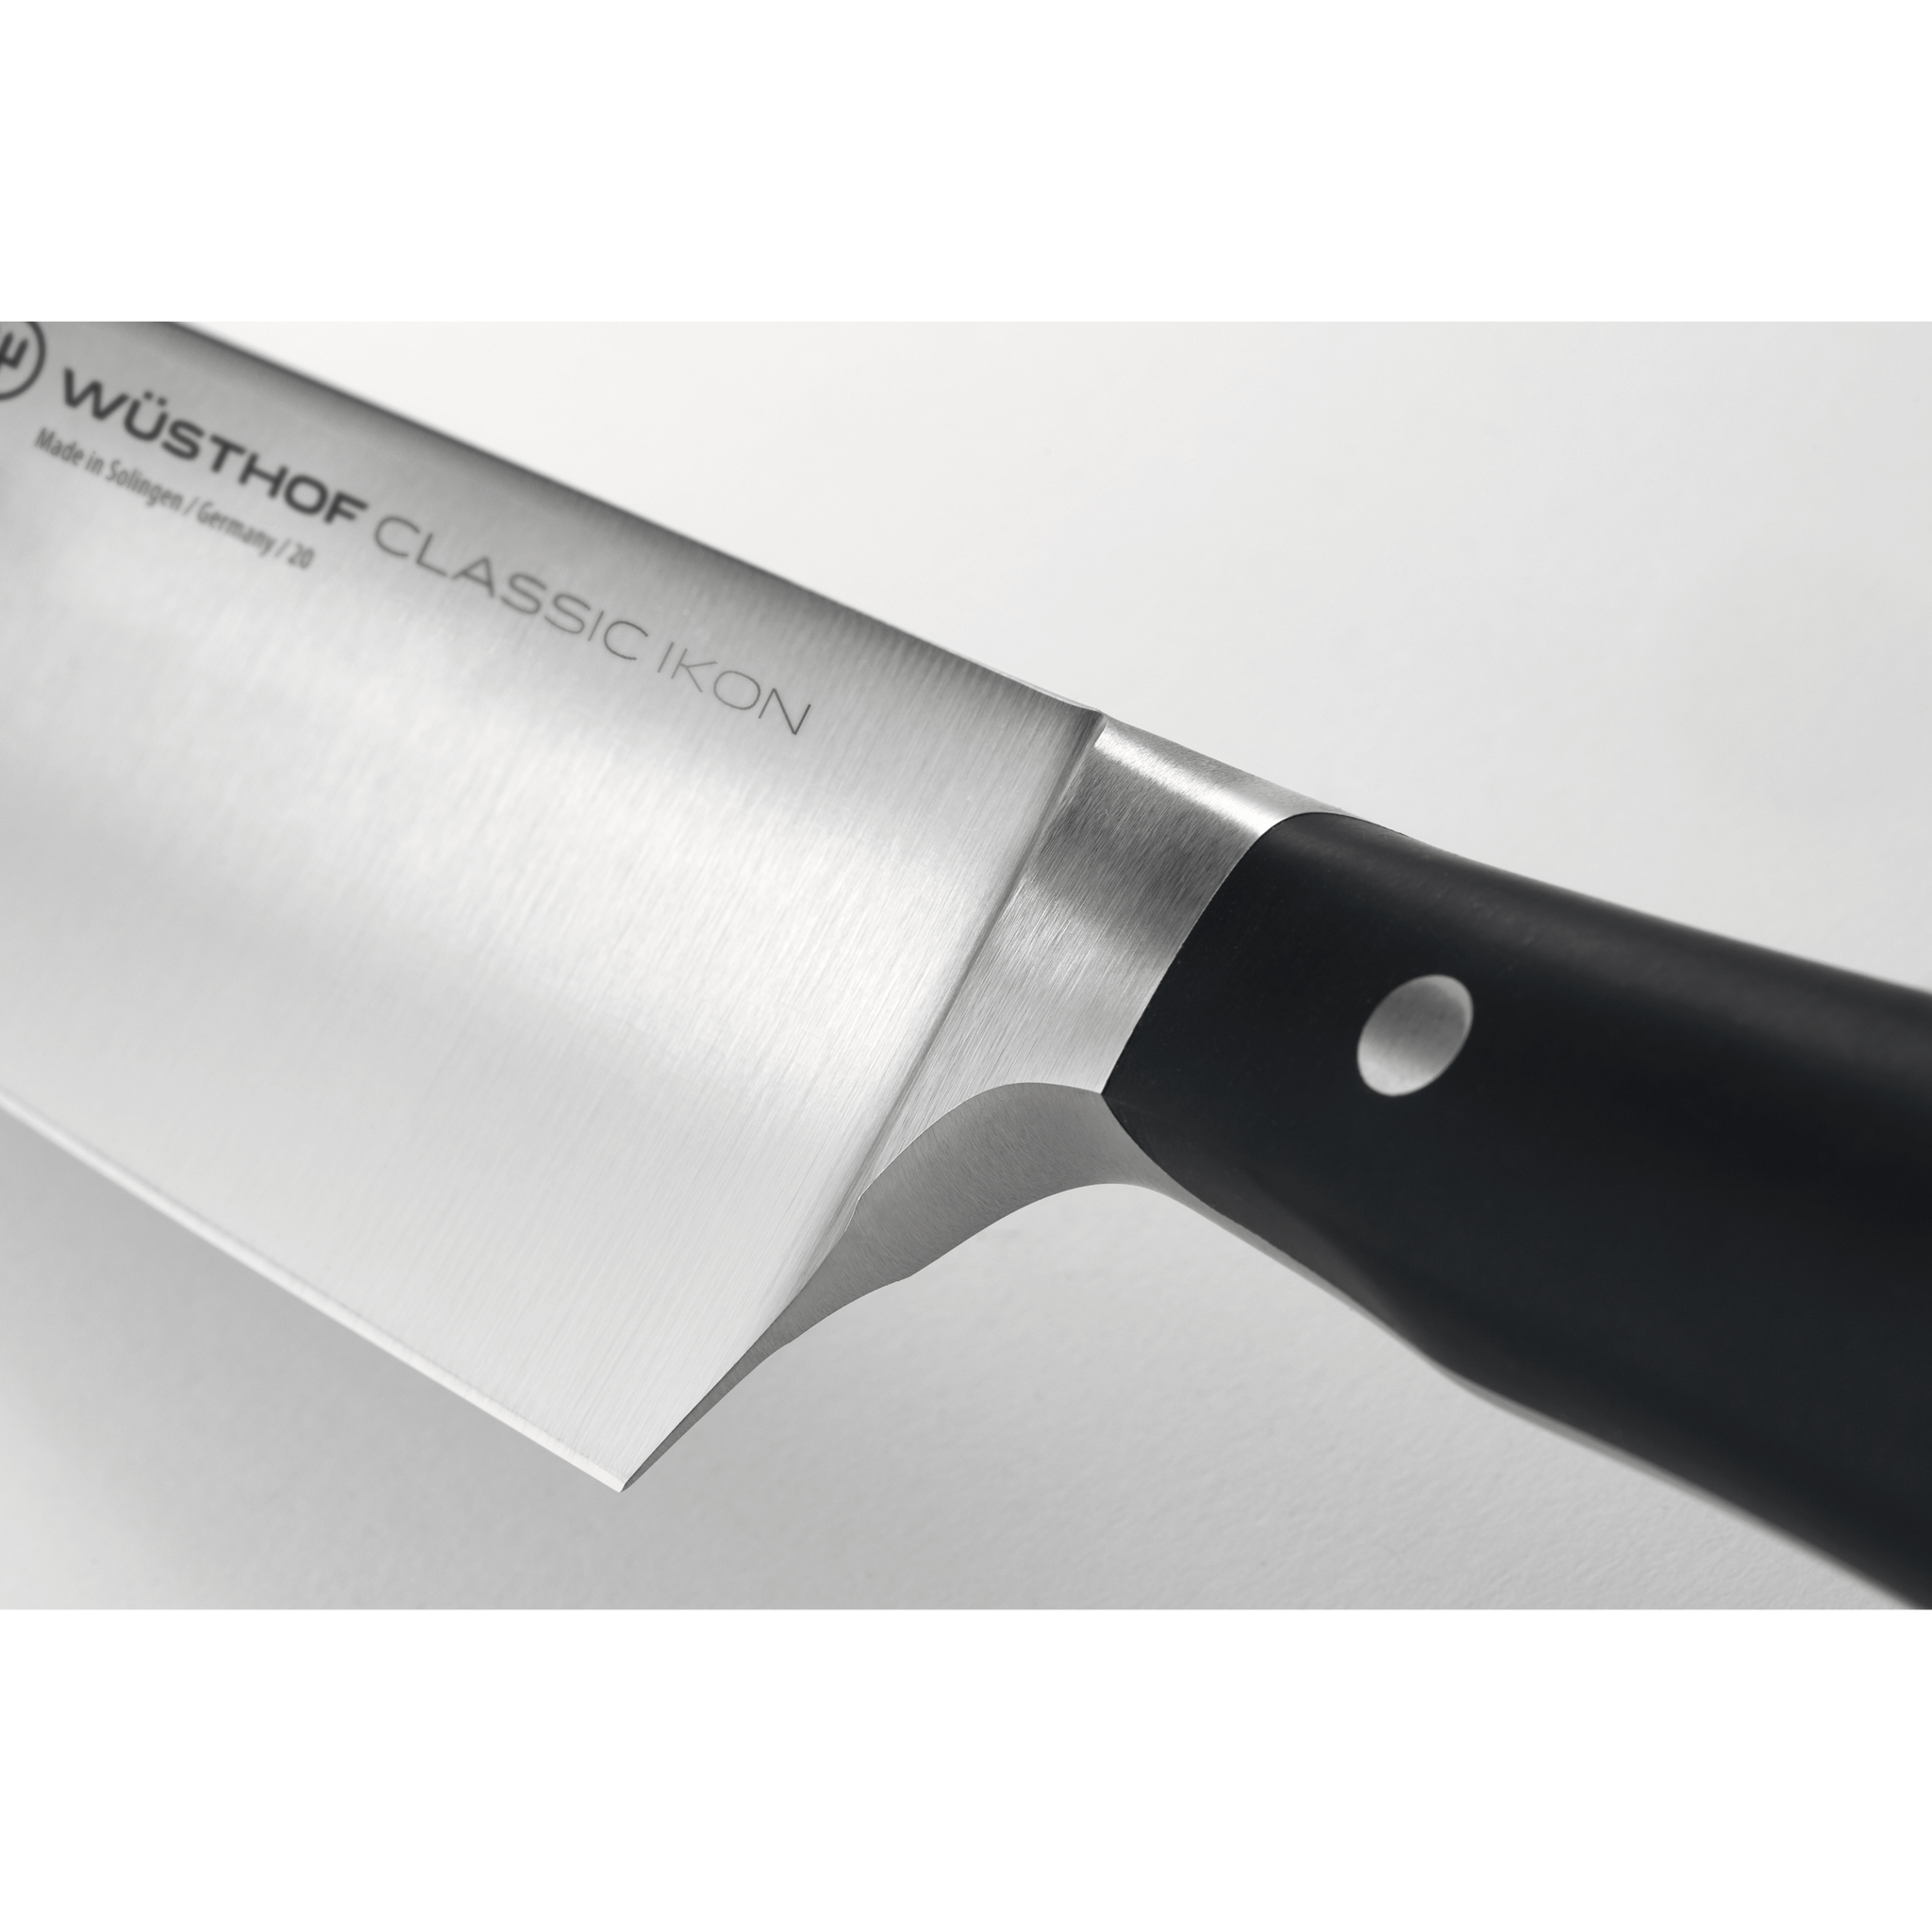 Wusthof Classic Ikon Black Chef's Knife